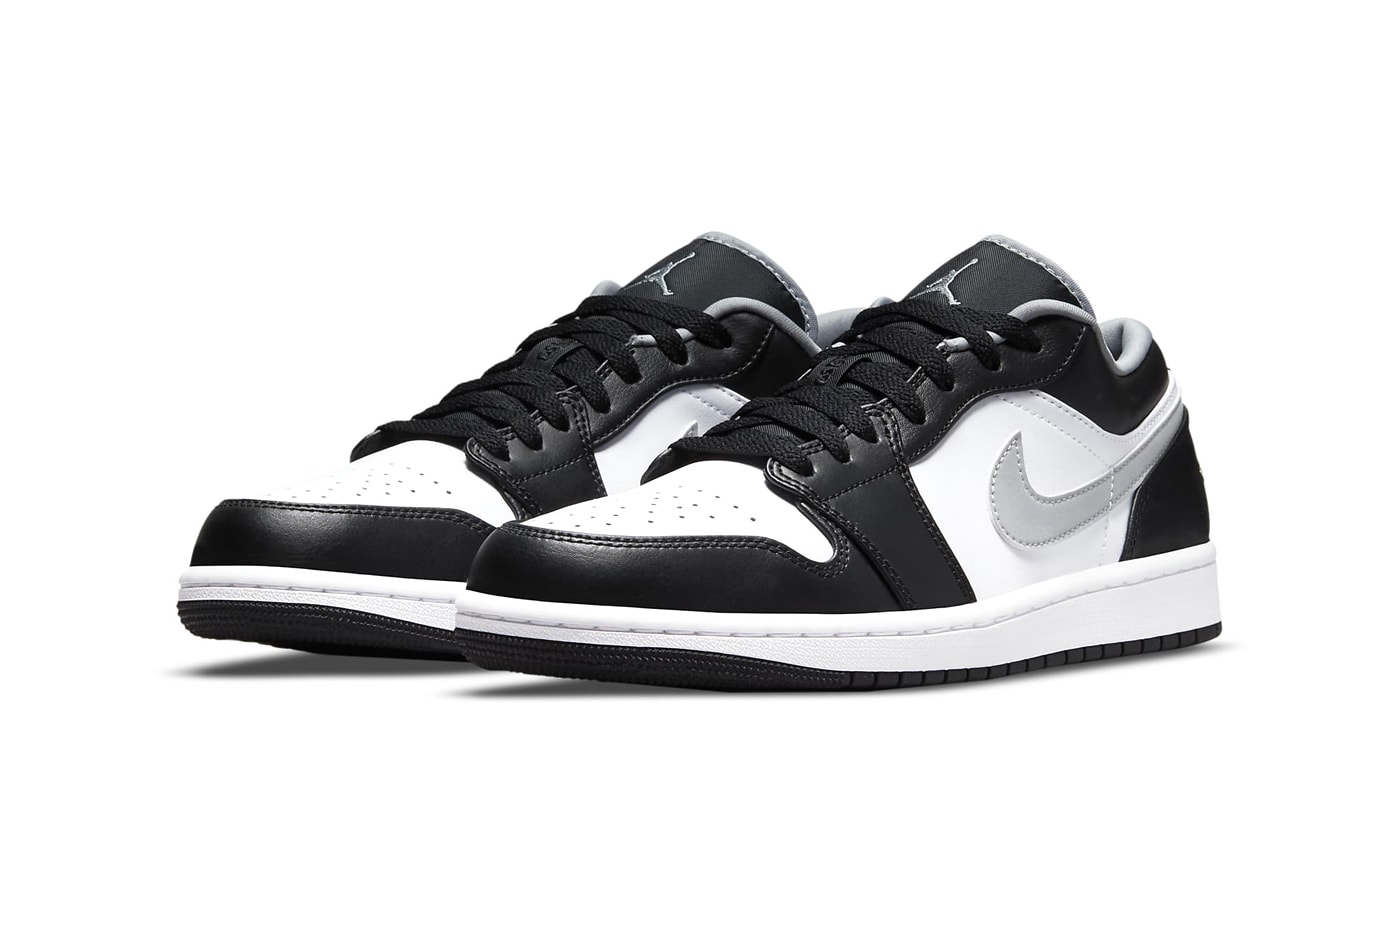 Nike Air Jordan 1 Low Shoe Black/White/Particle Grey 553558-040 Release 2021